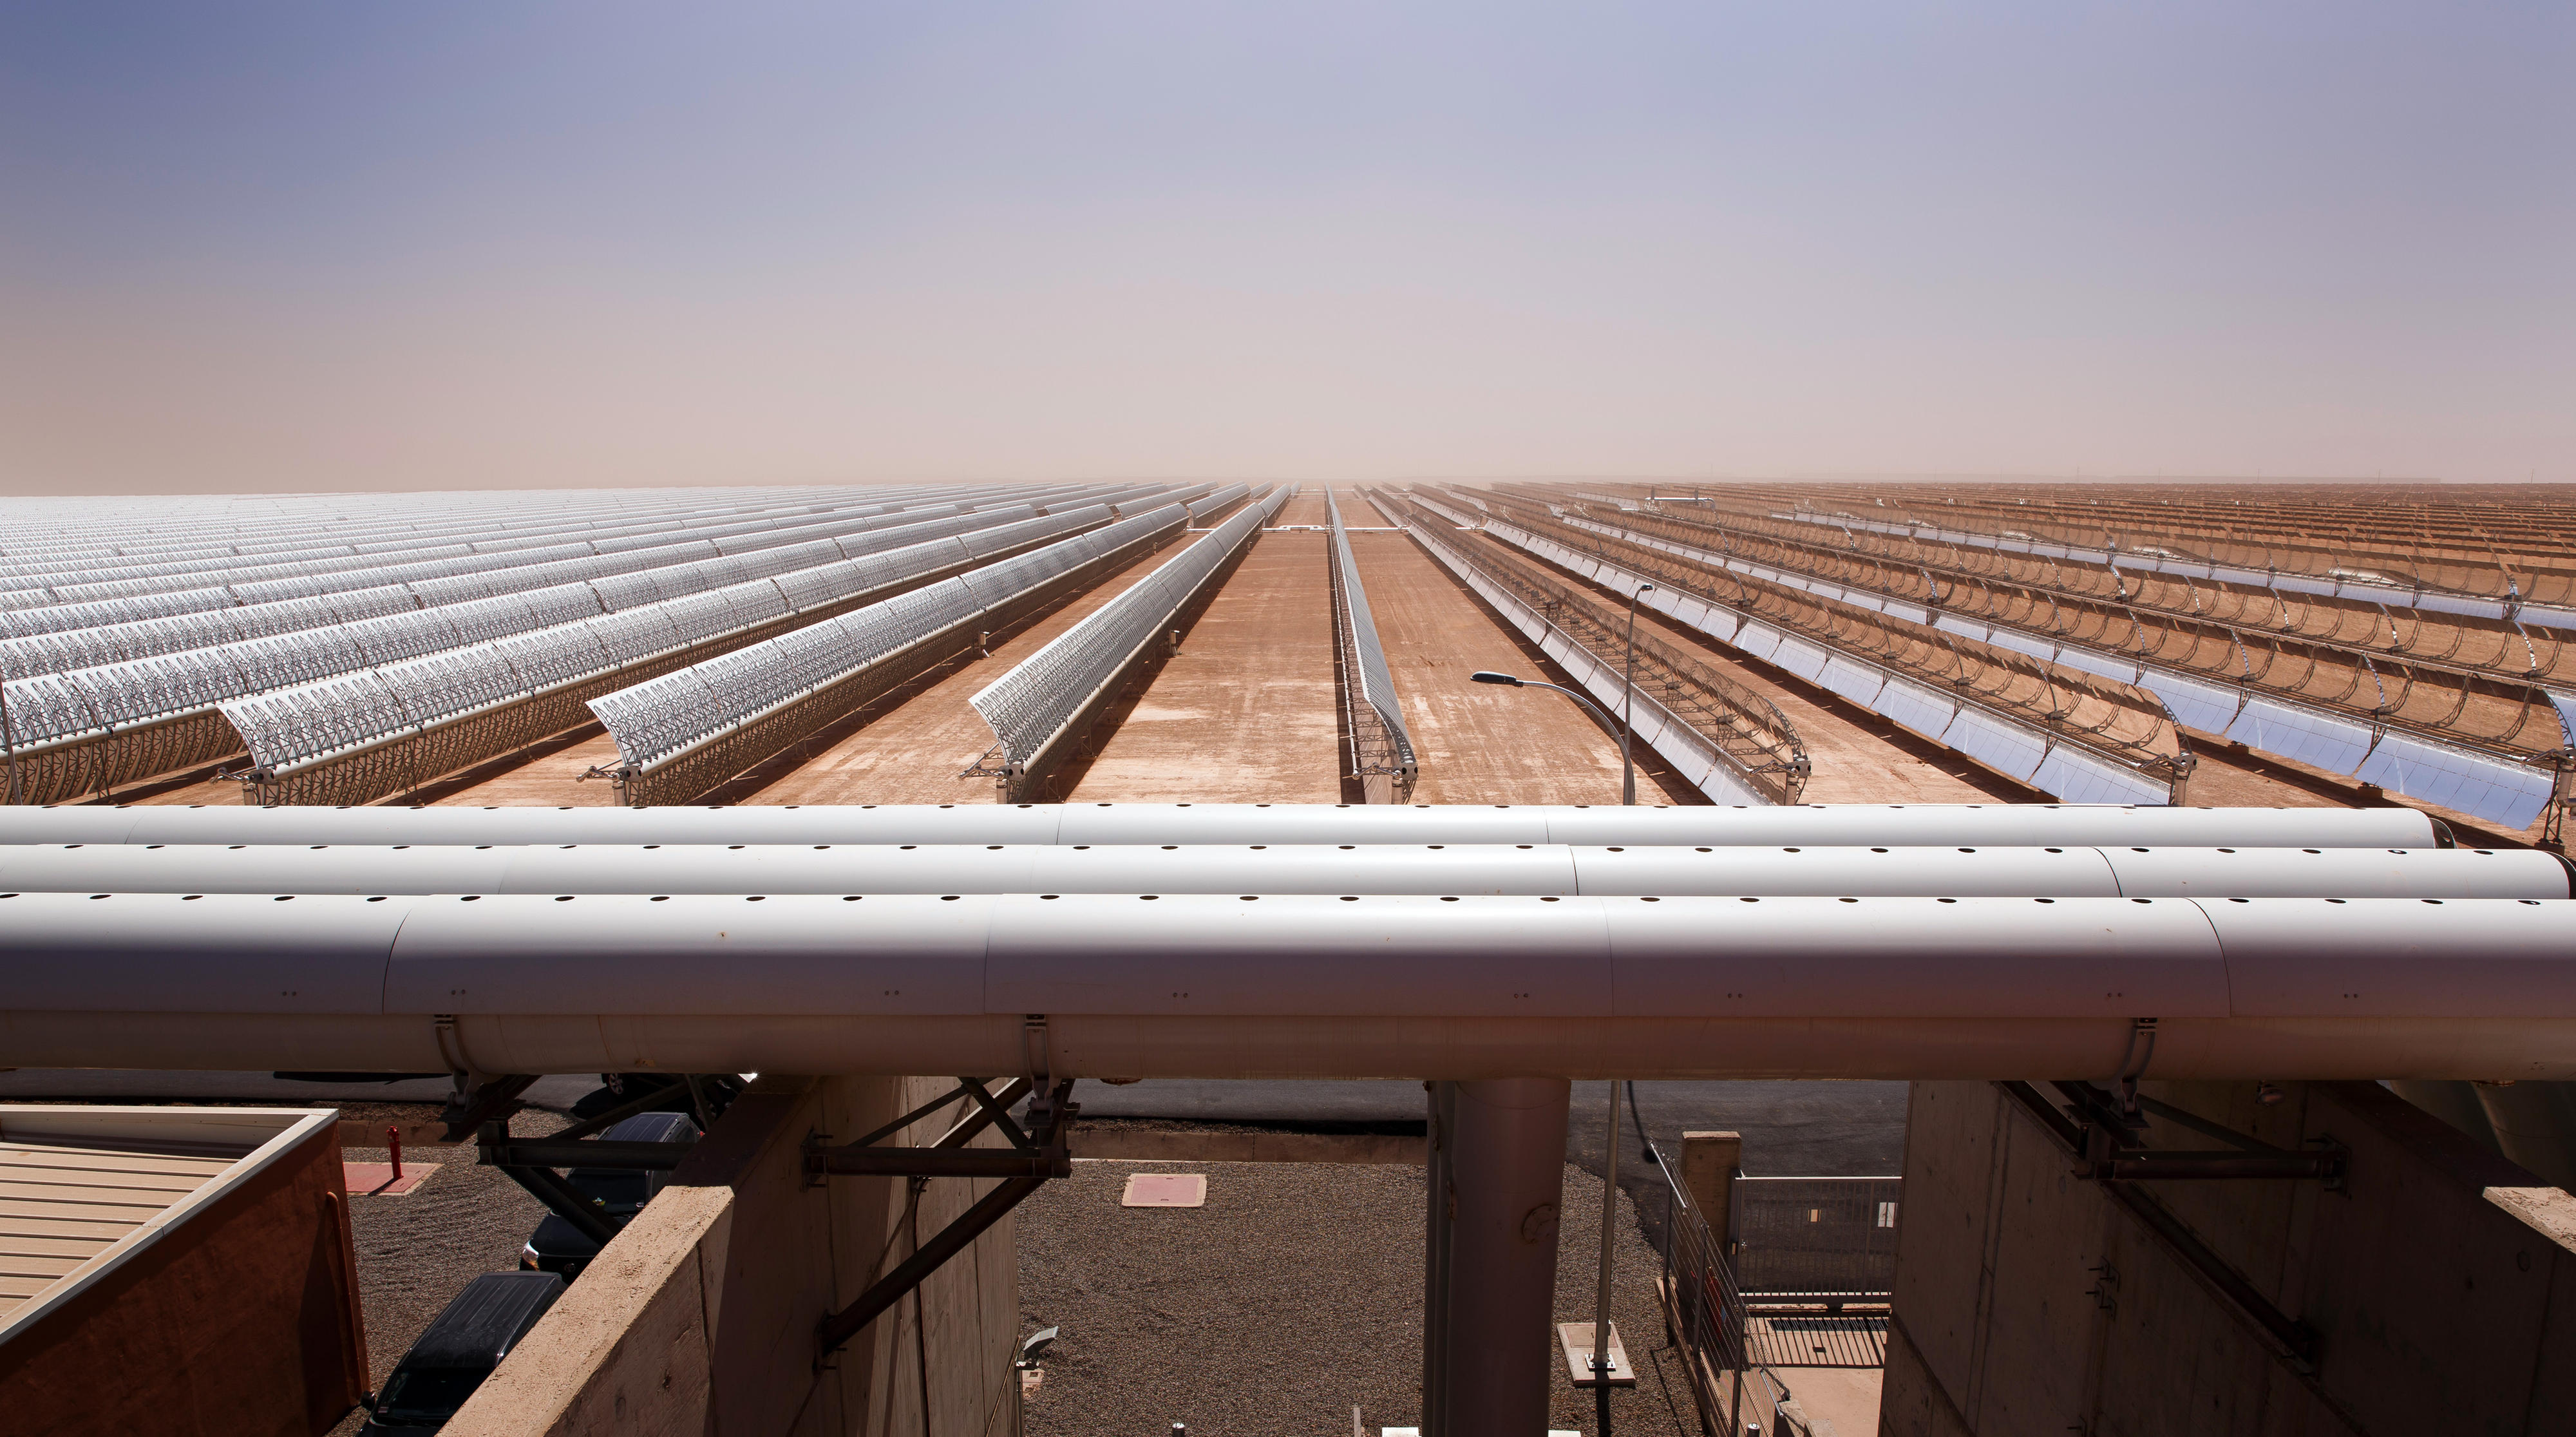 Solar panels of a solar power plant in Ouarzazate, Morocco